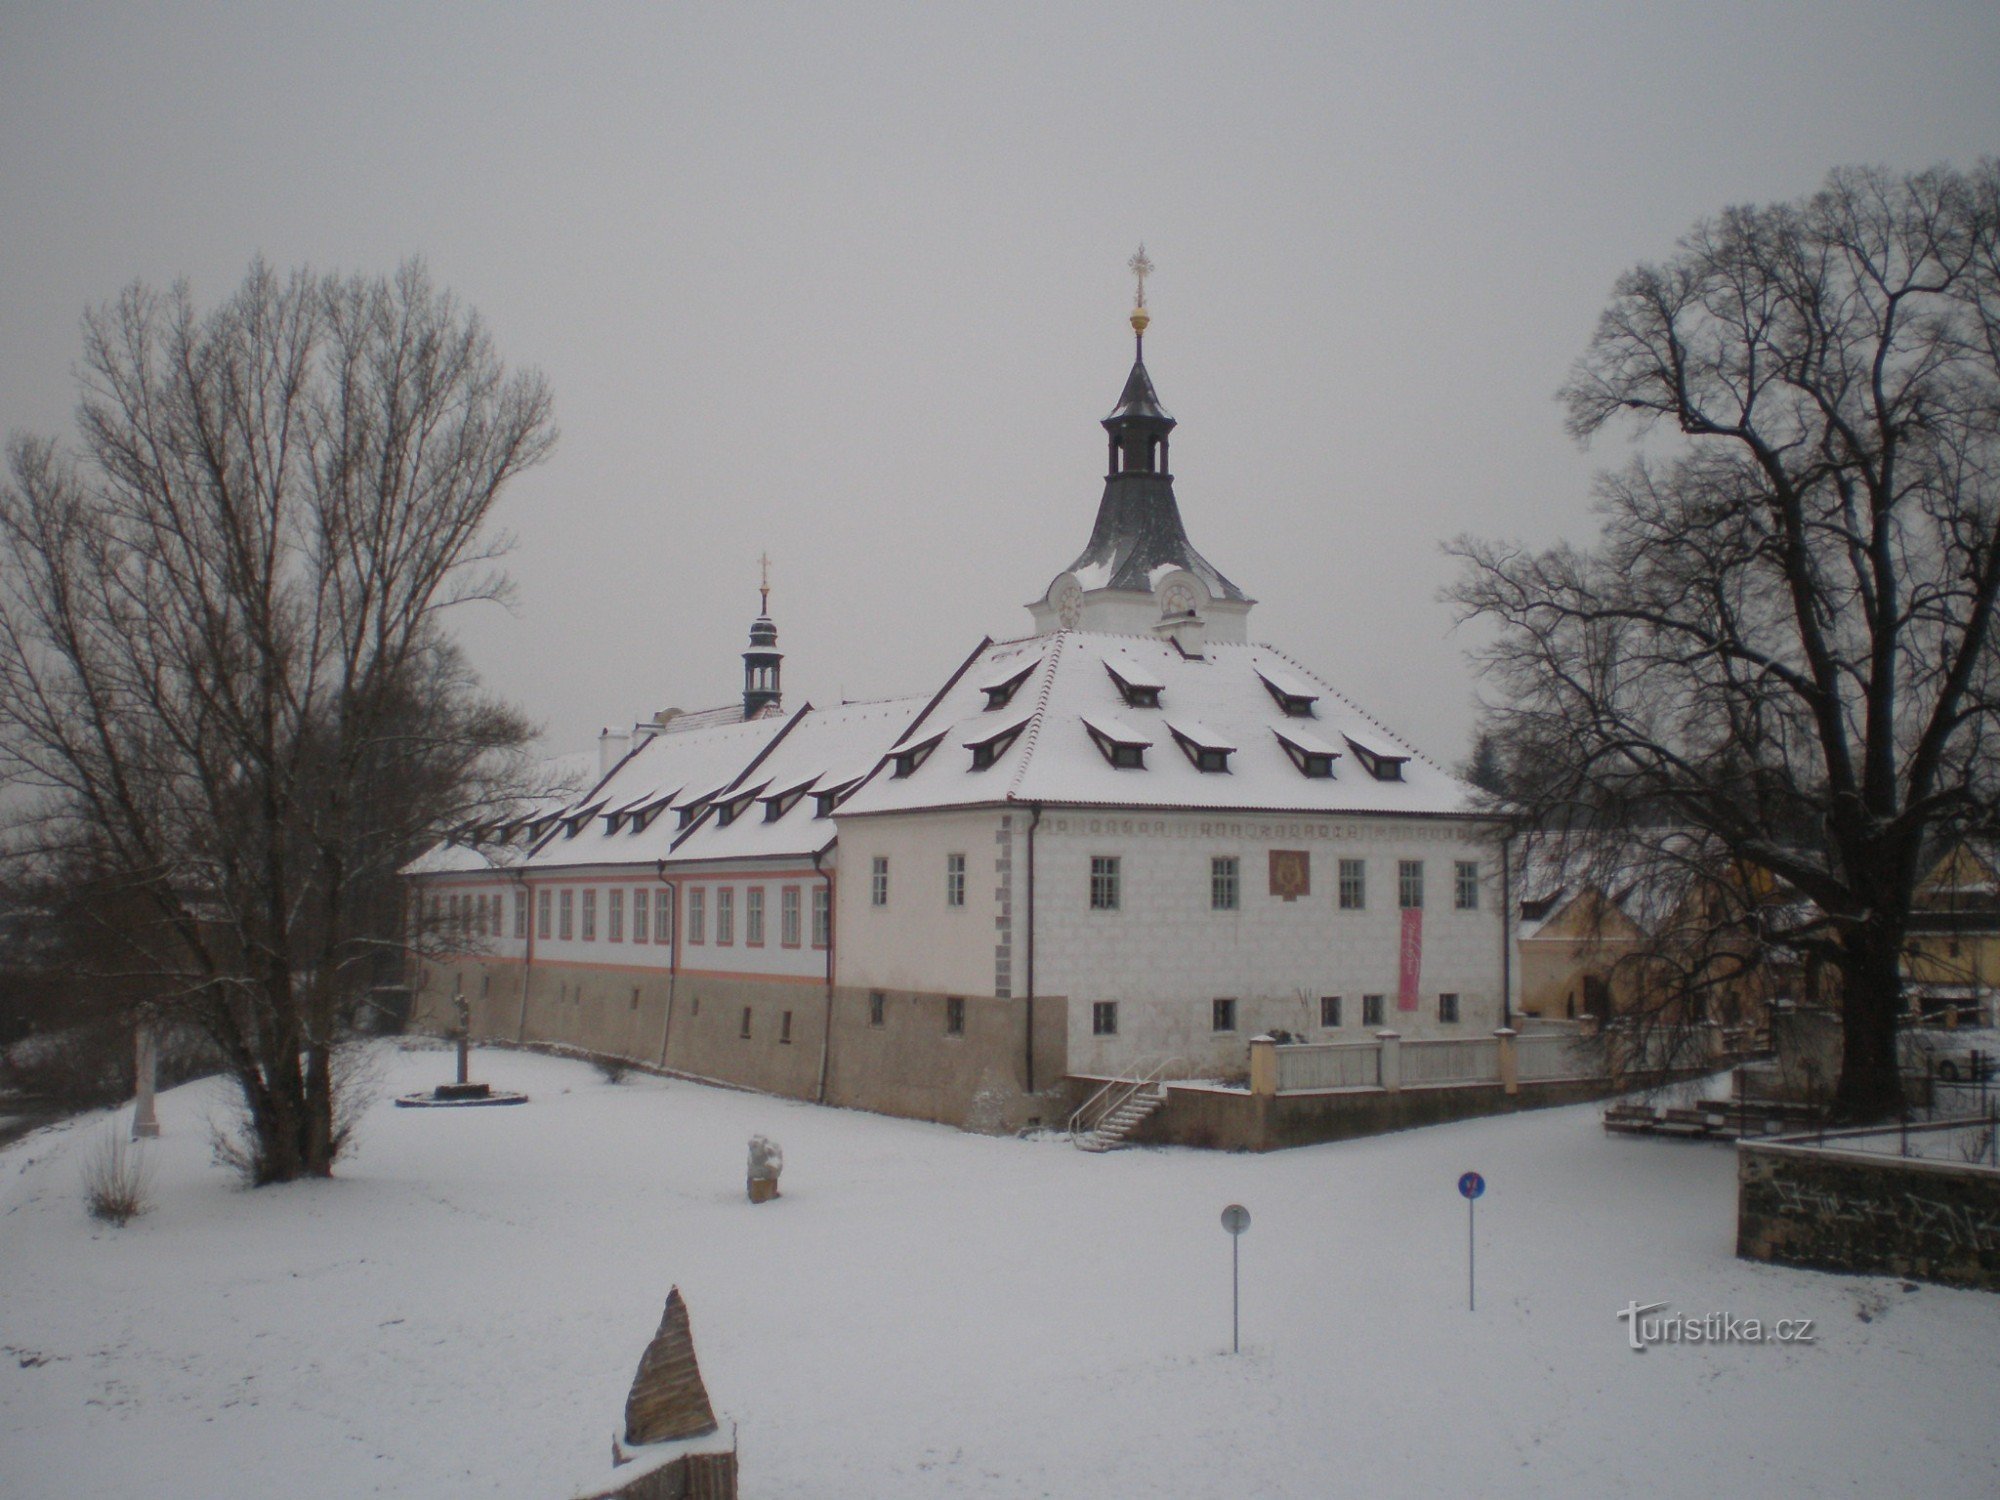 Dobrichovice - château